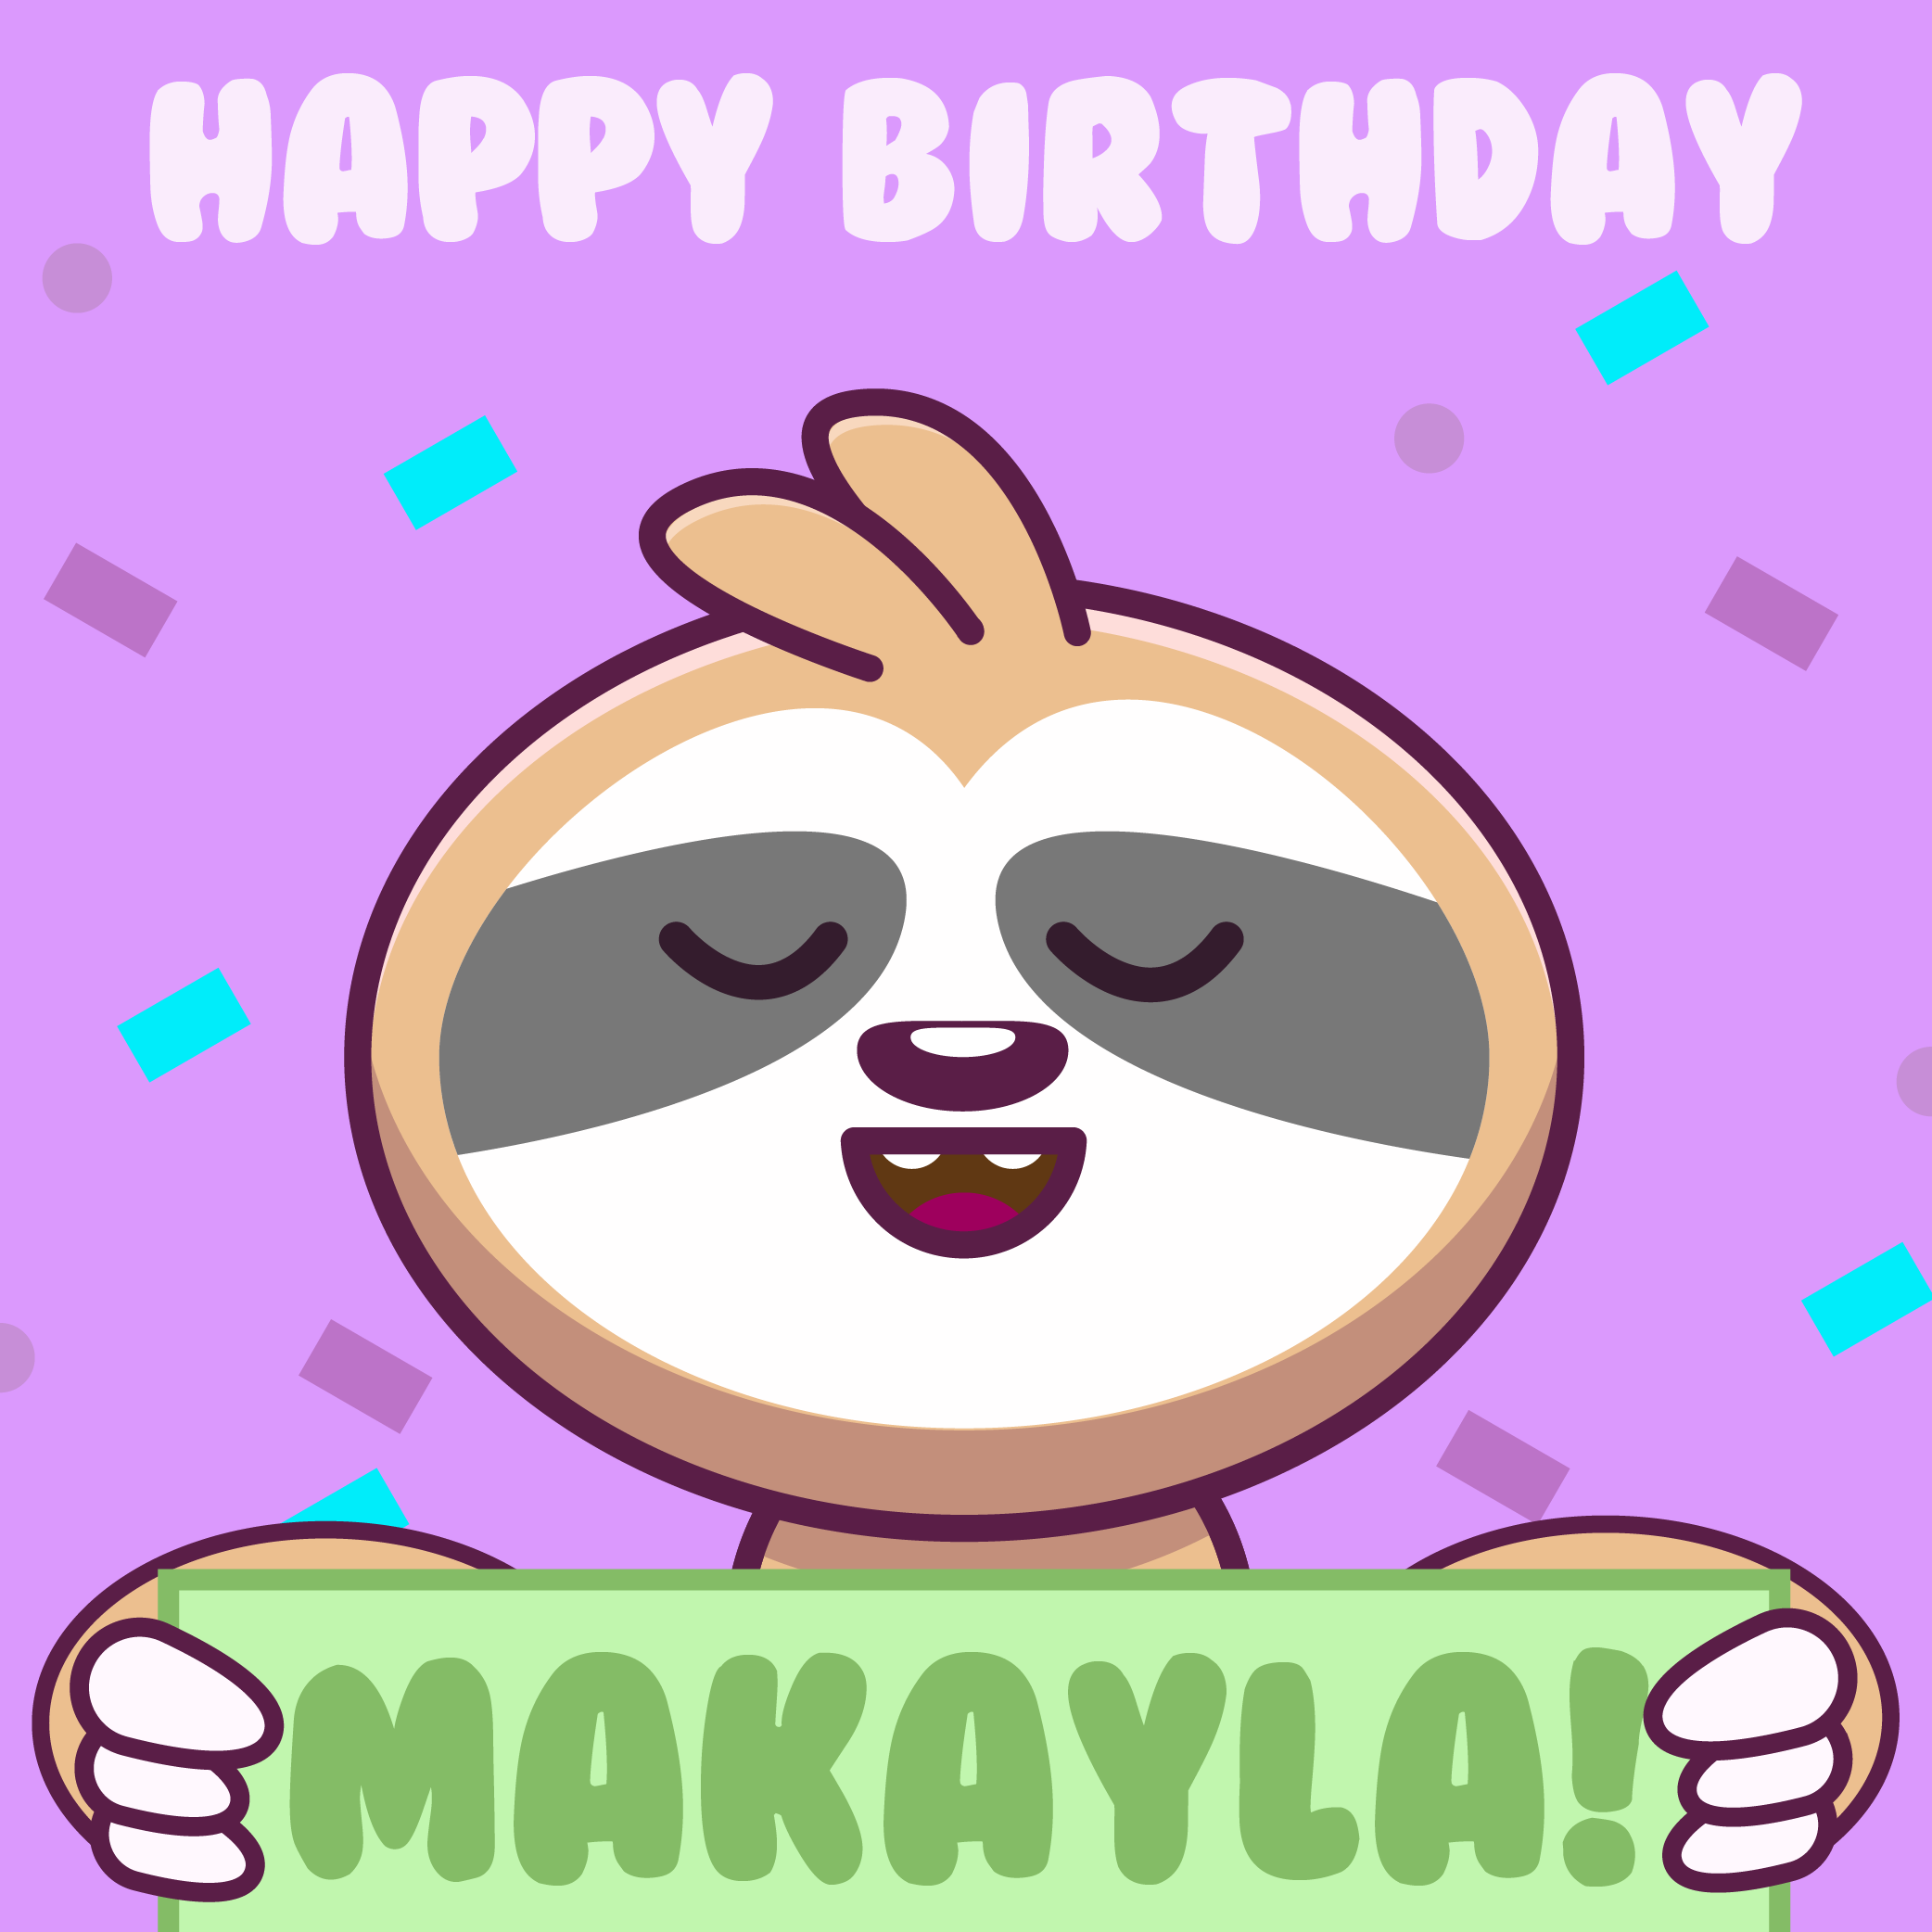 Sept 19 Makayla Sloth 01